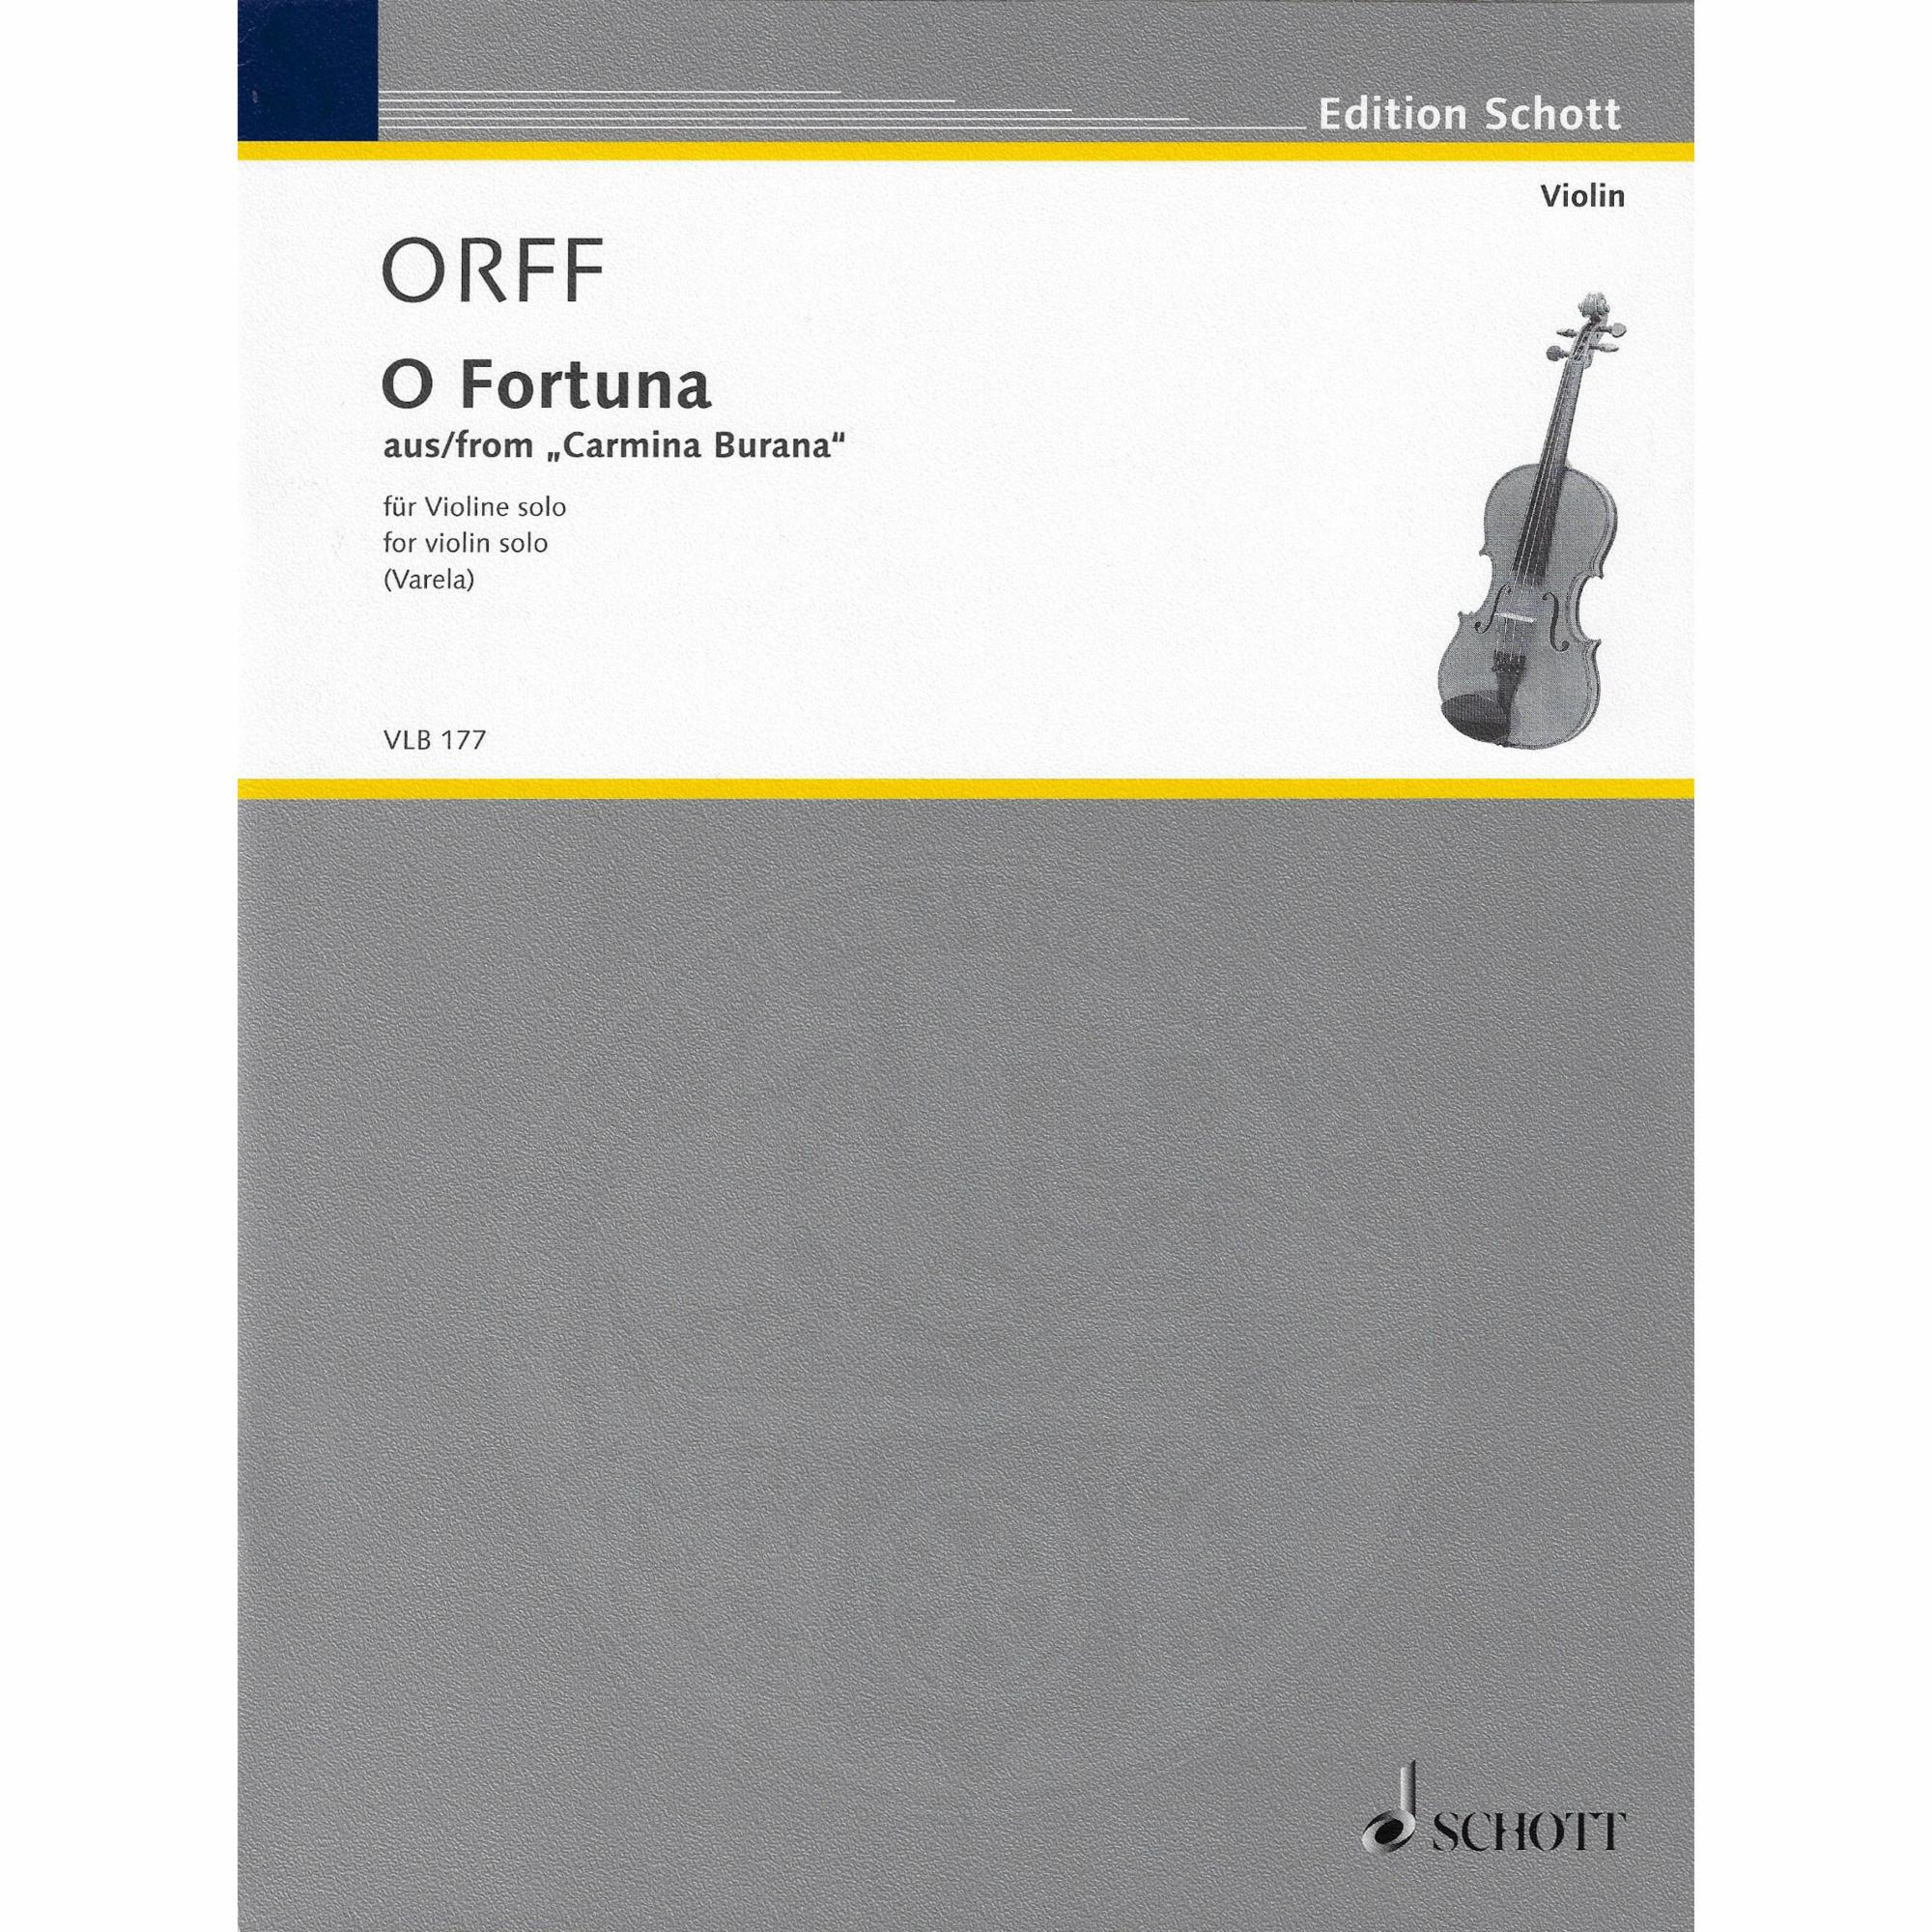 Orff -- O Fortuna, from Carmina Burana for Solo Violin